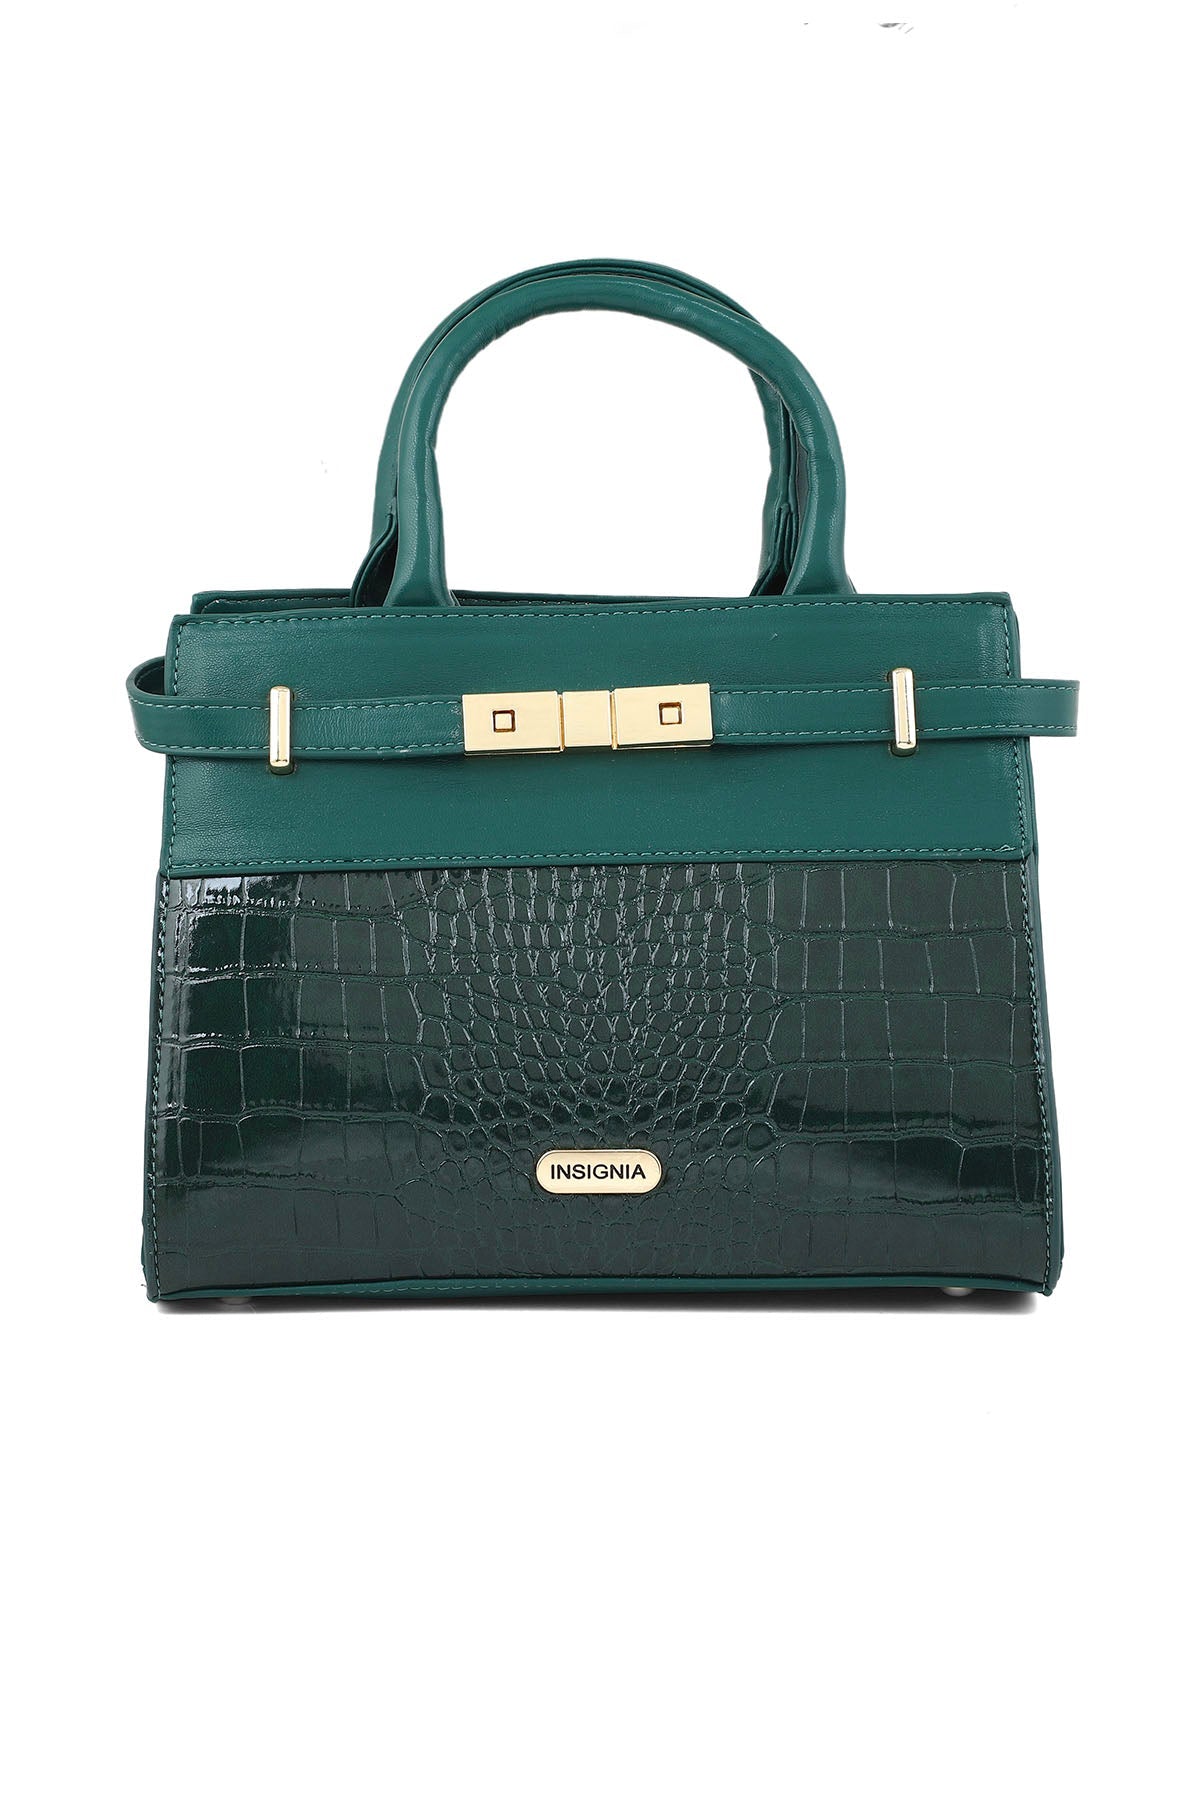 Formal Tote Hand Bags B15069-Green